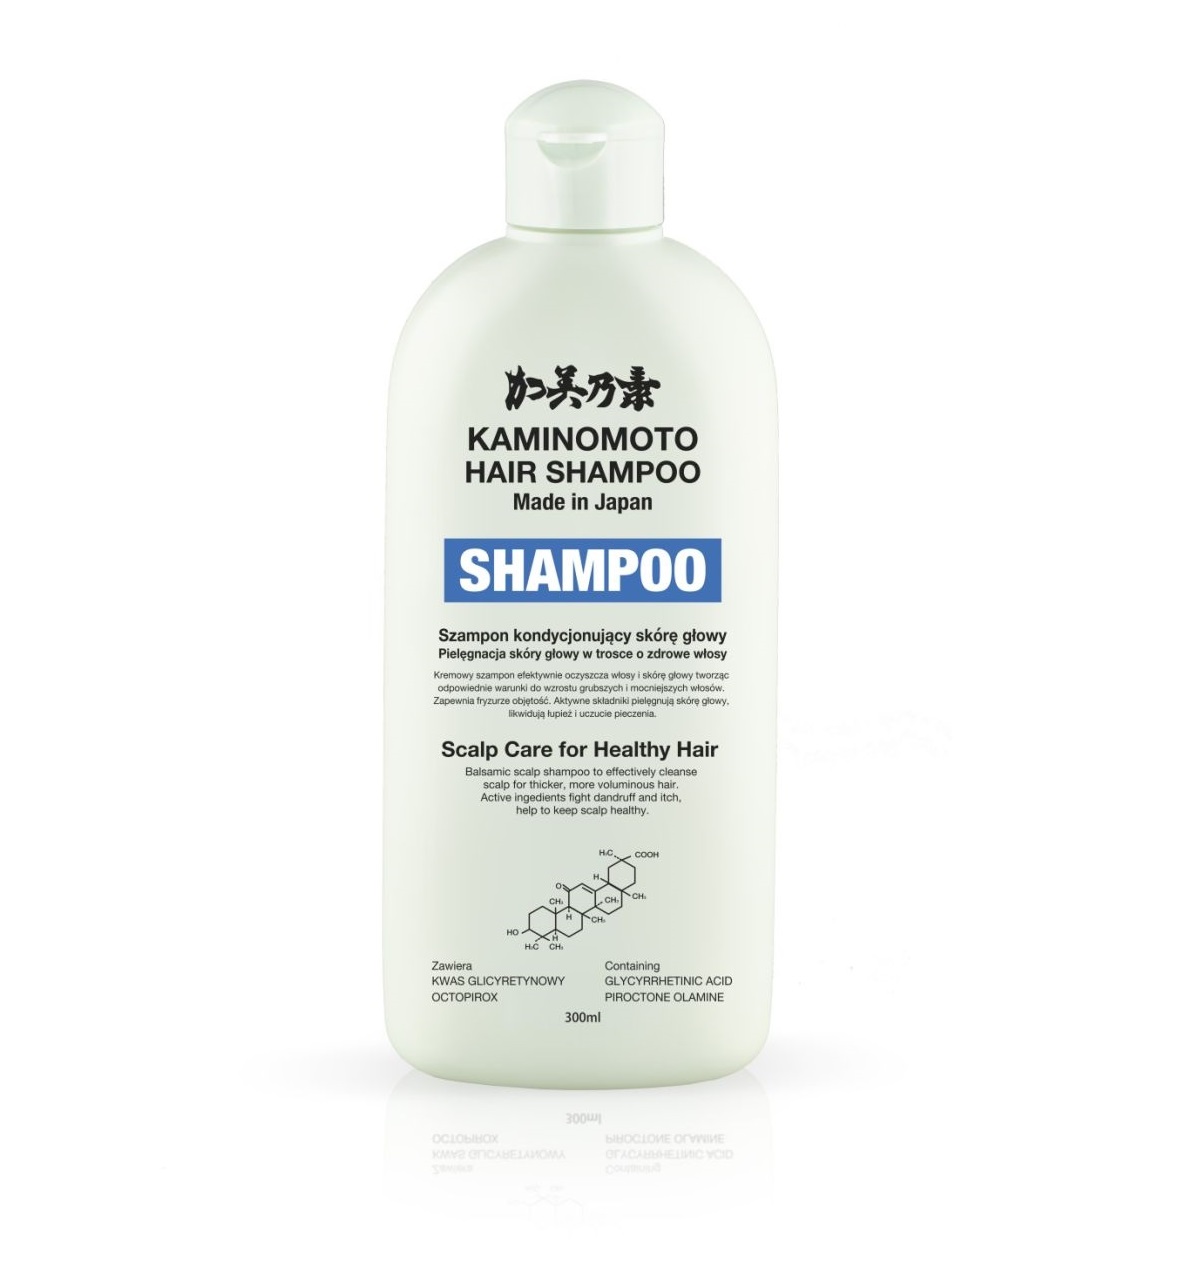 https://kaminomoto.pl/wp-content/uploads/2020/04/kaminomoto-shampoo-3.jpg